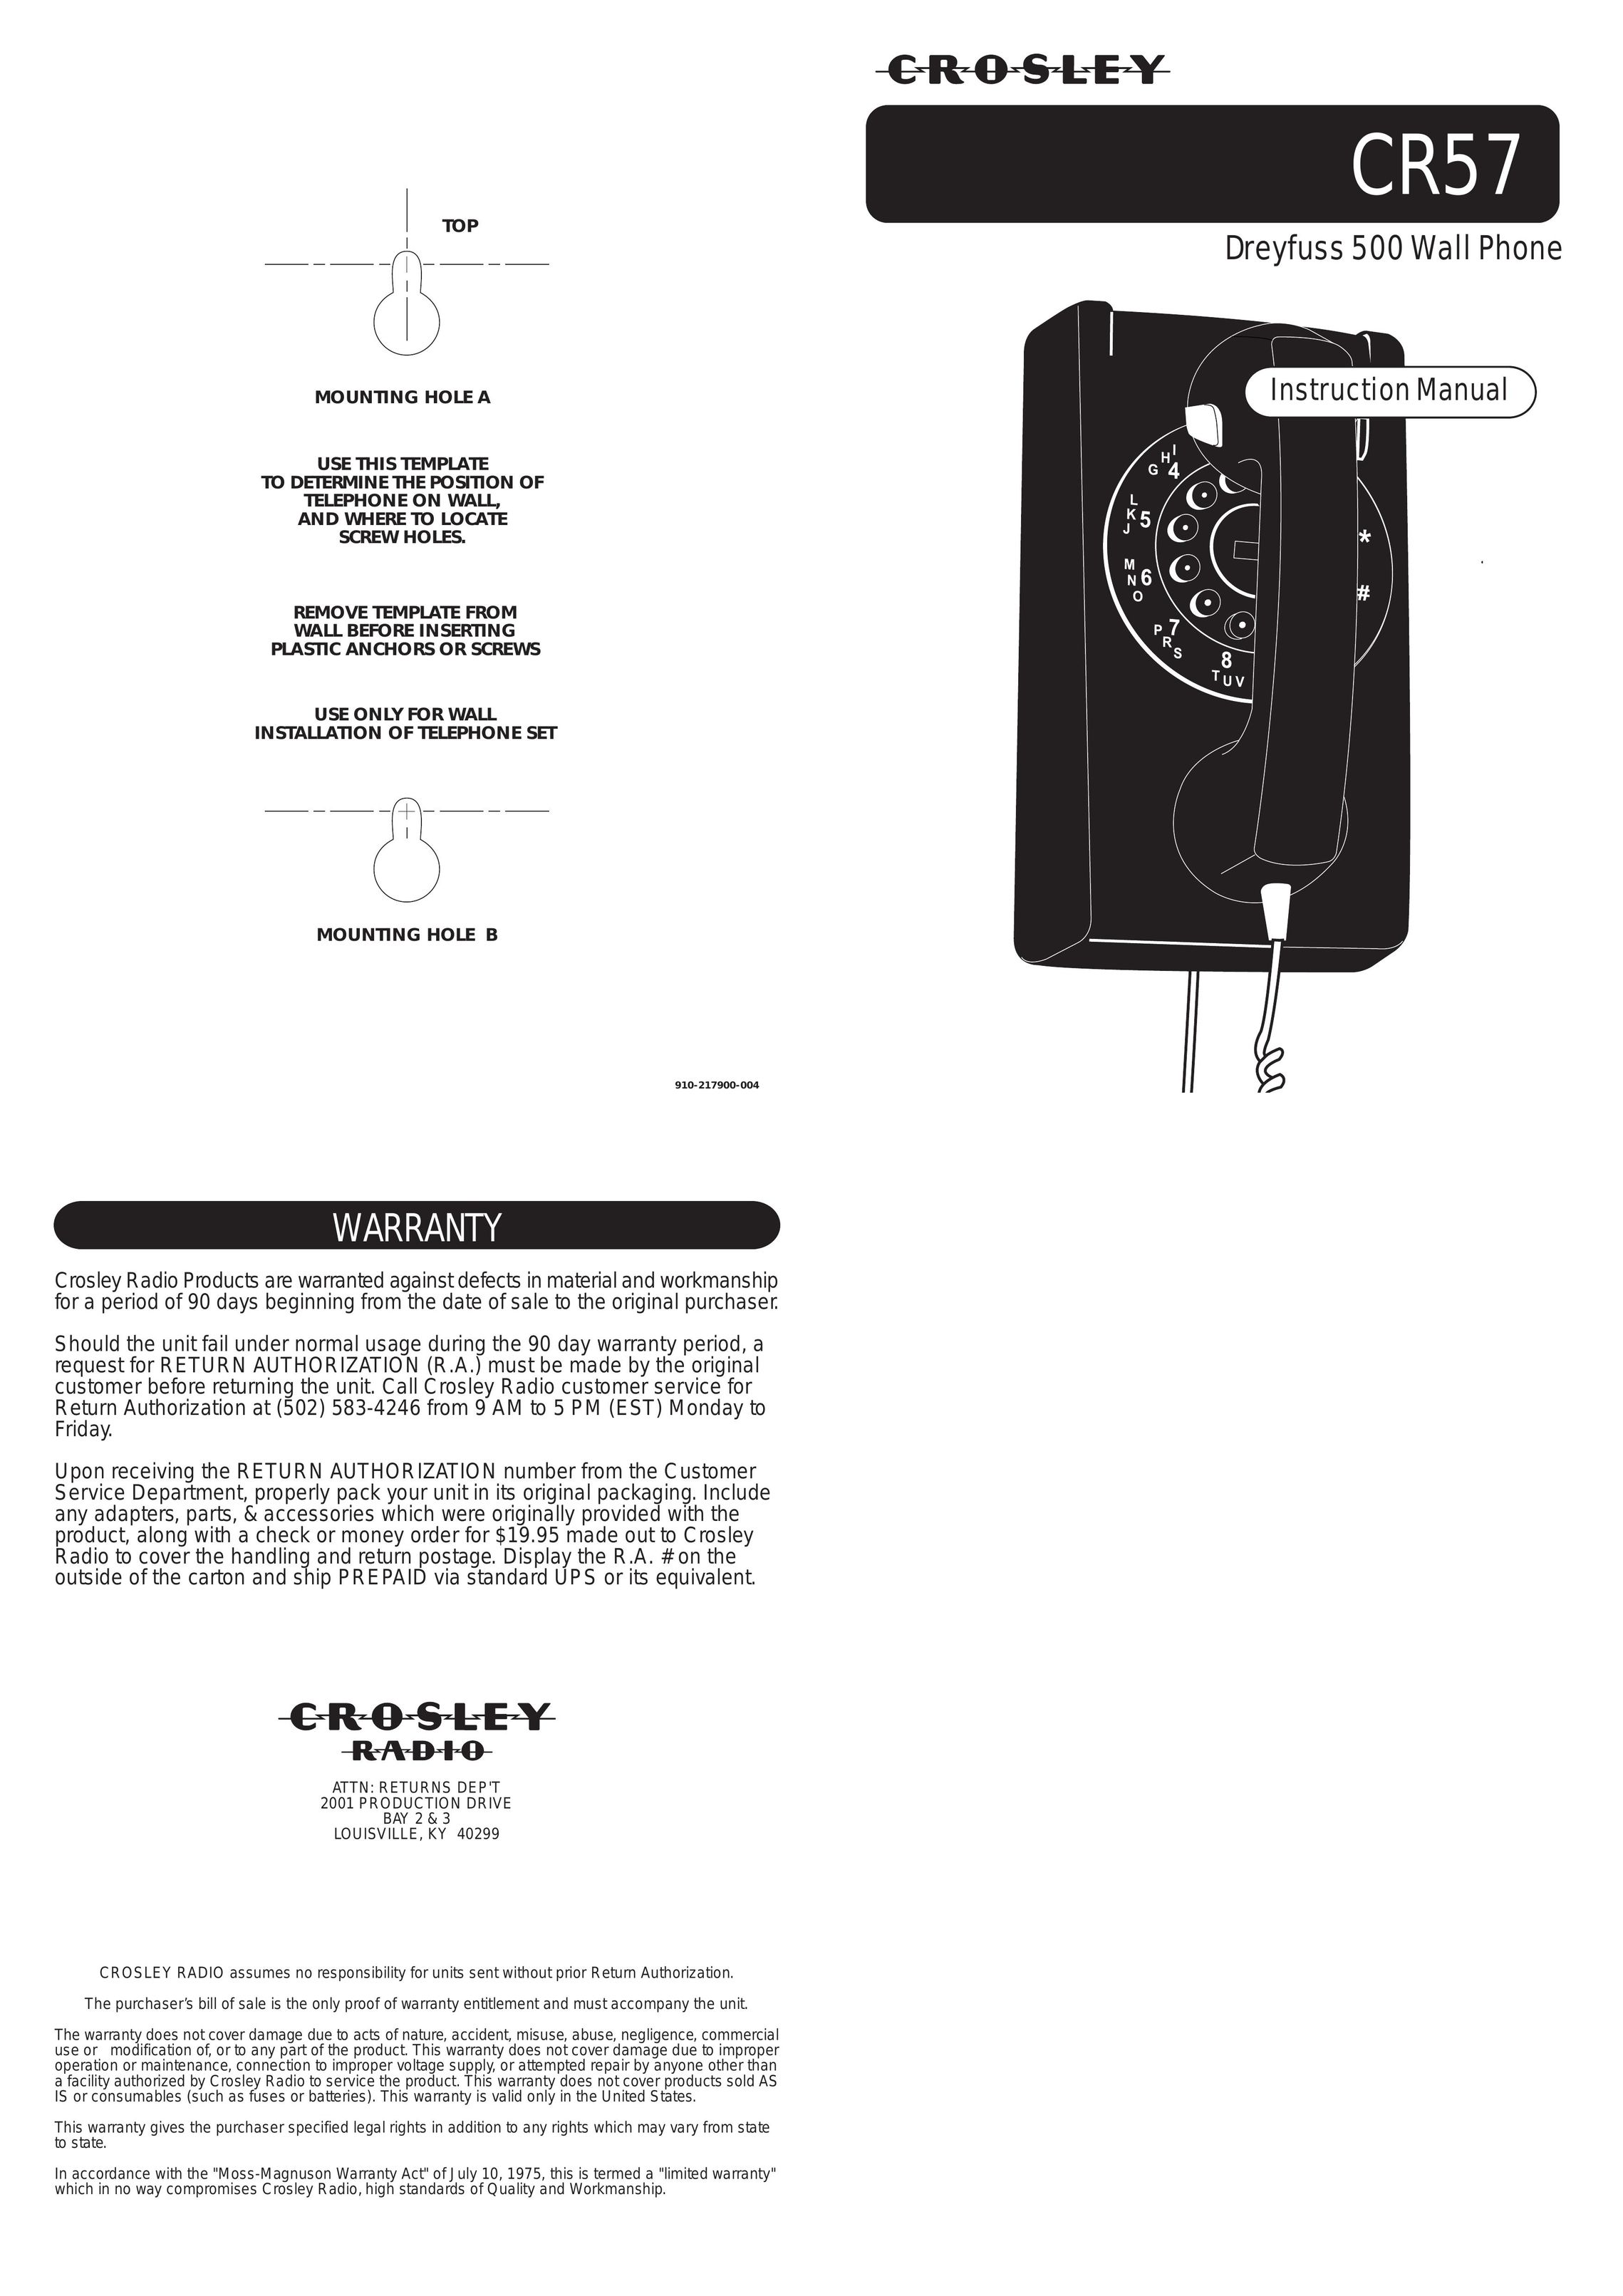 Crosley Radio CR57 Telephone User Manual